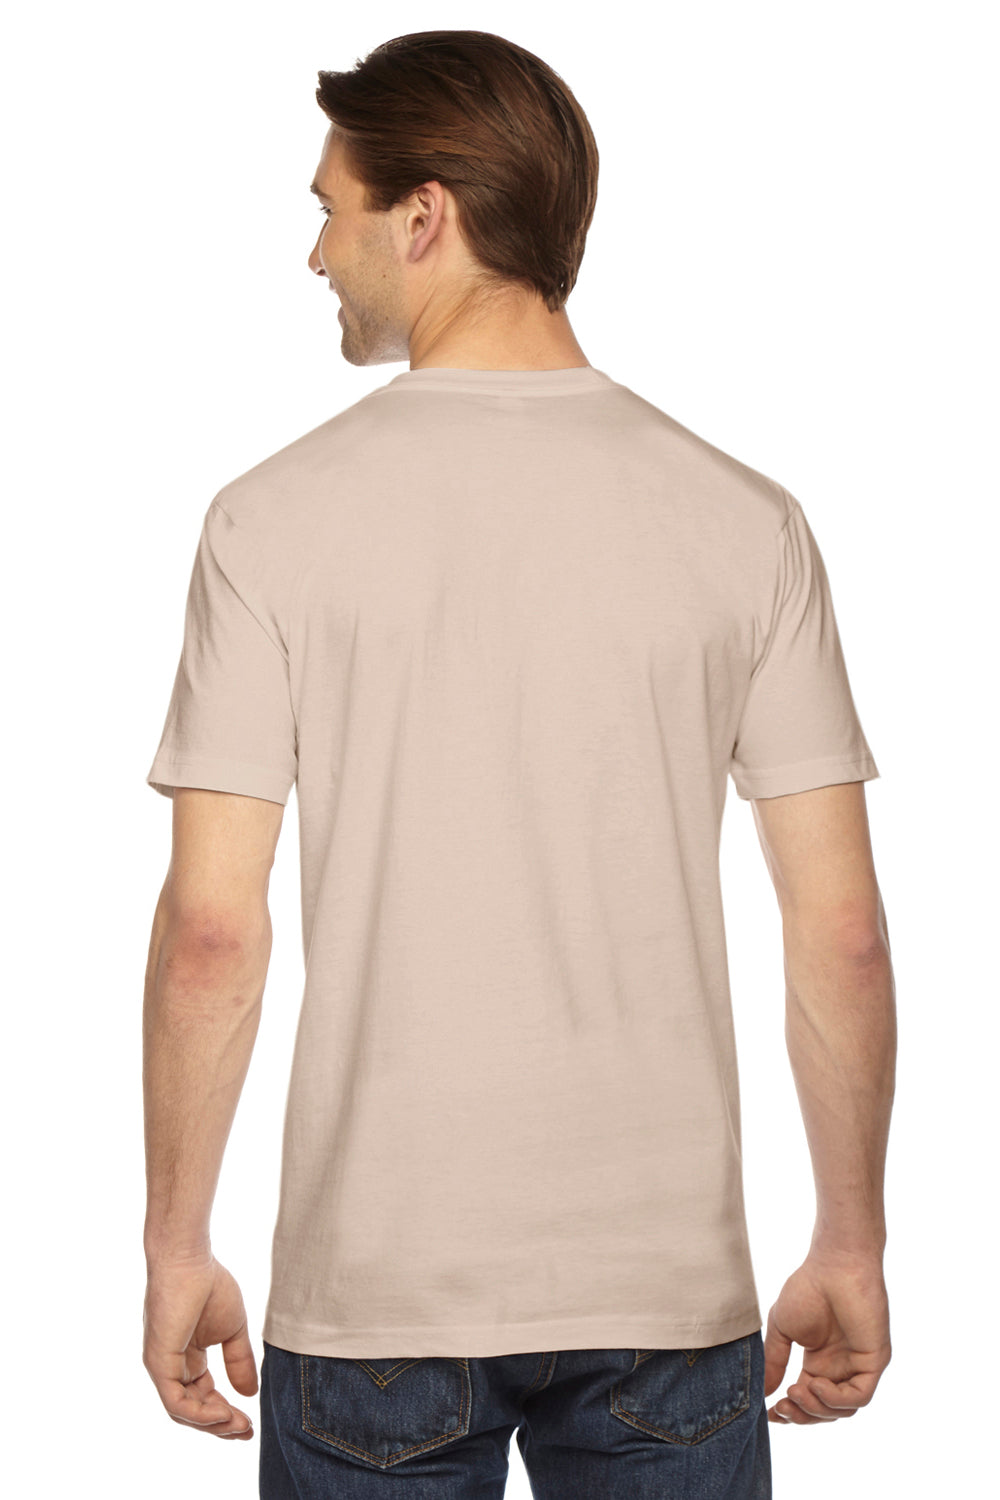 American Apparel 2001W Mens Fine Jersey Short Sleeve Crewneck T-Shirt Cream Back